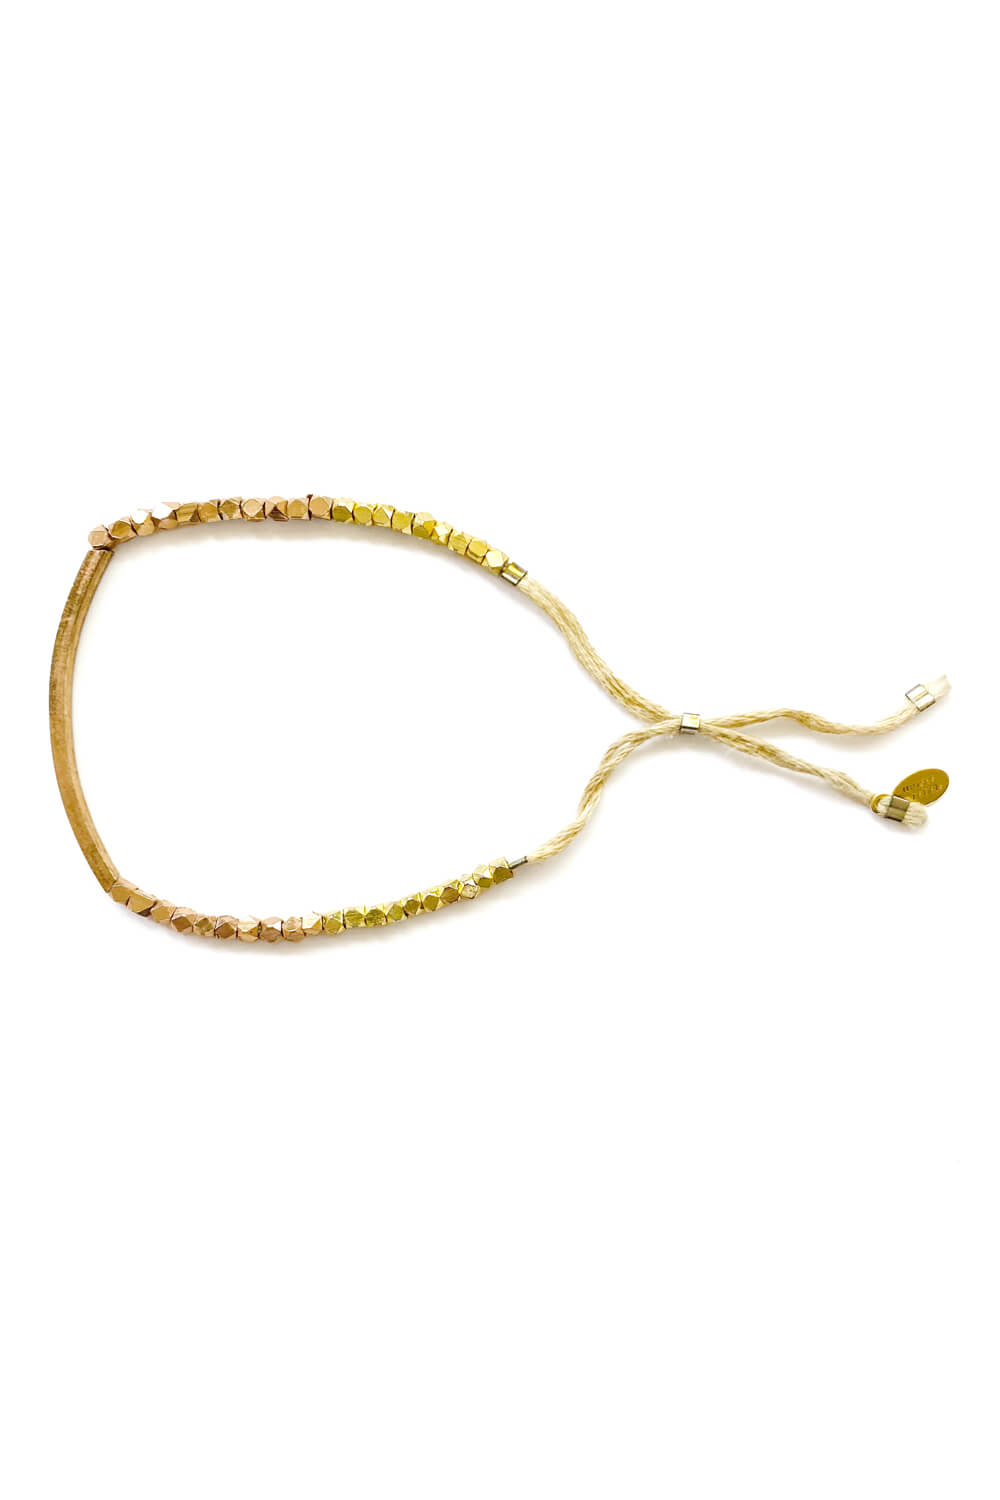 thread bracelet - rose gold bar